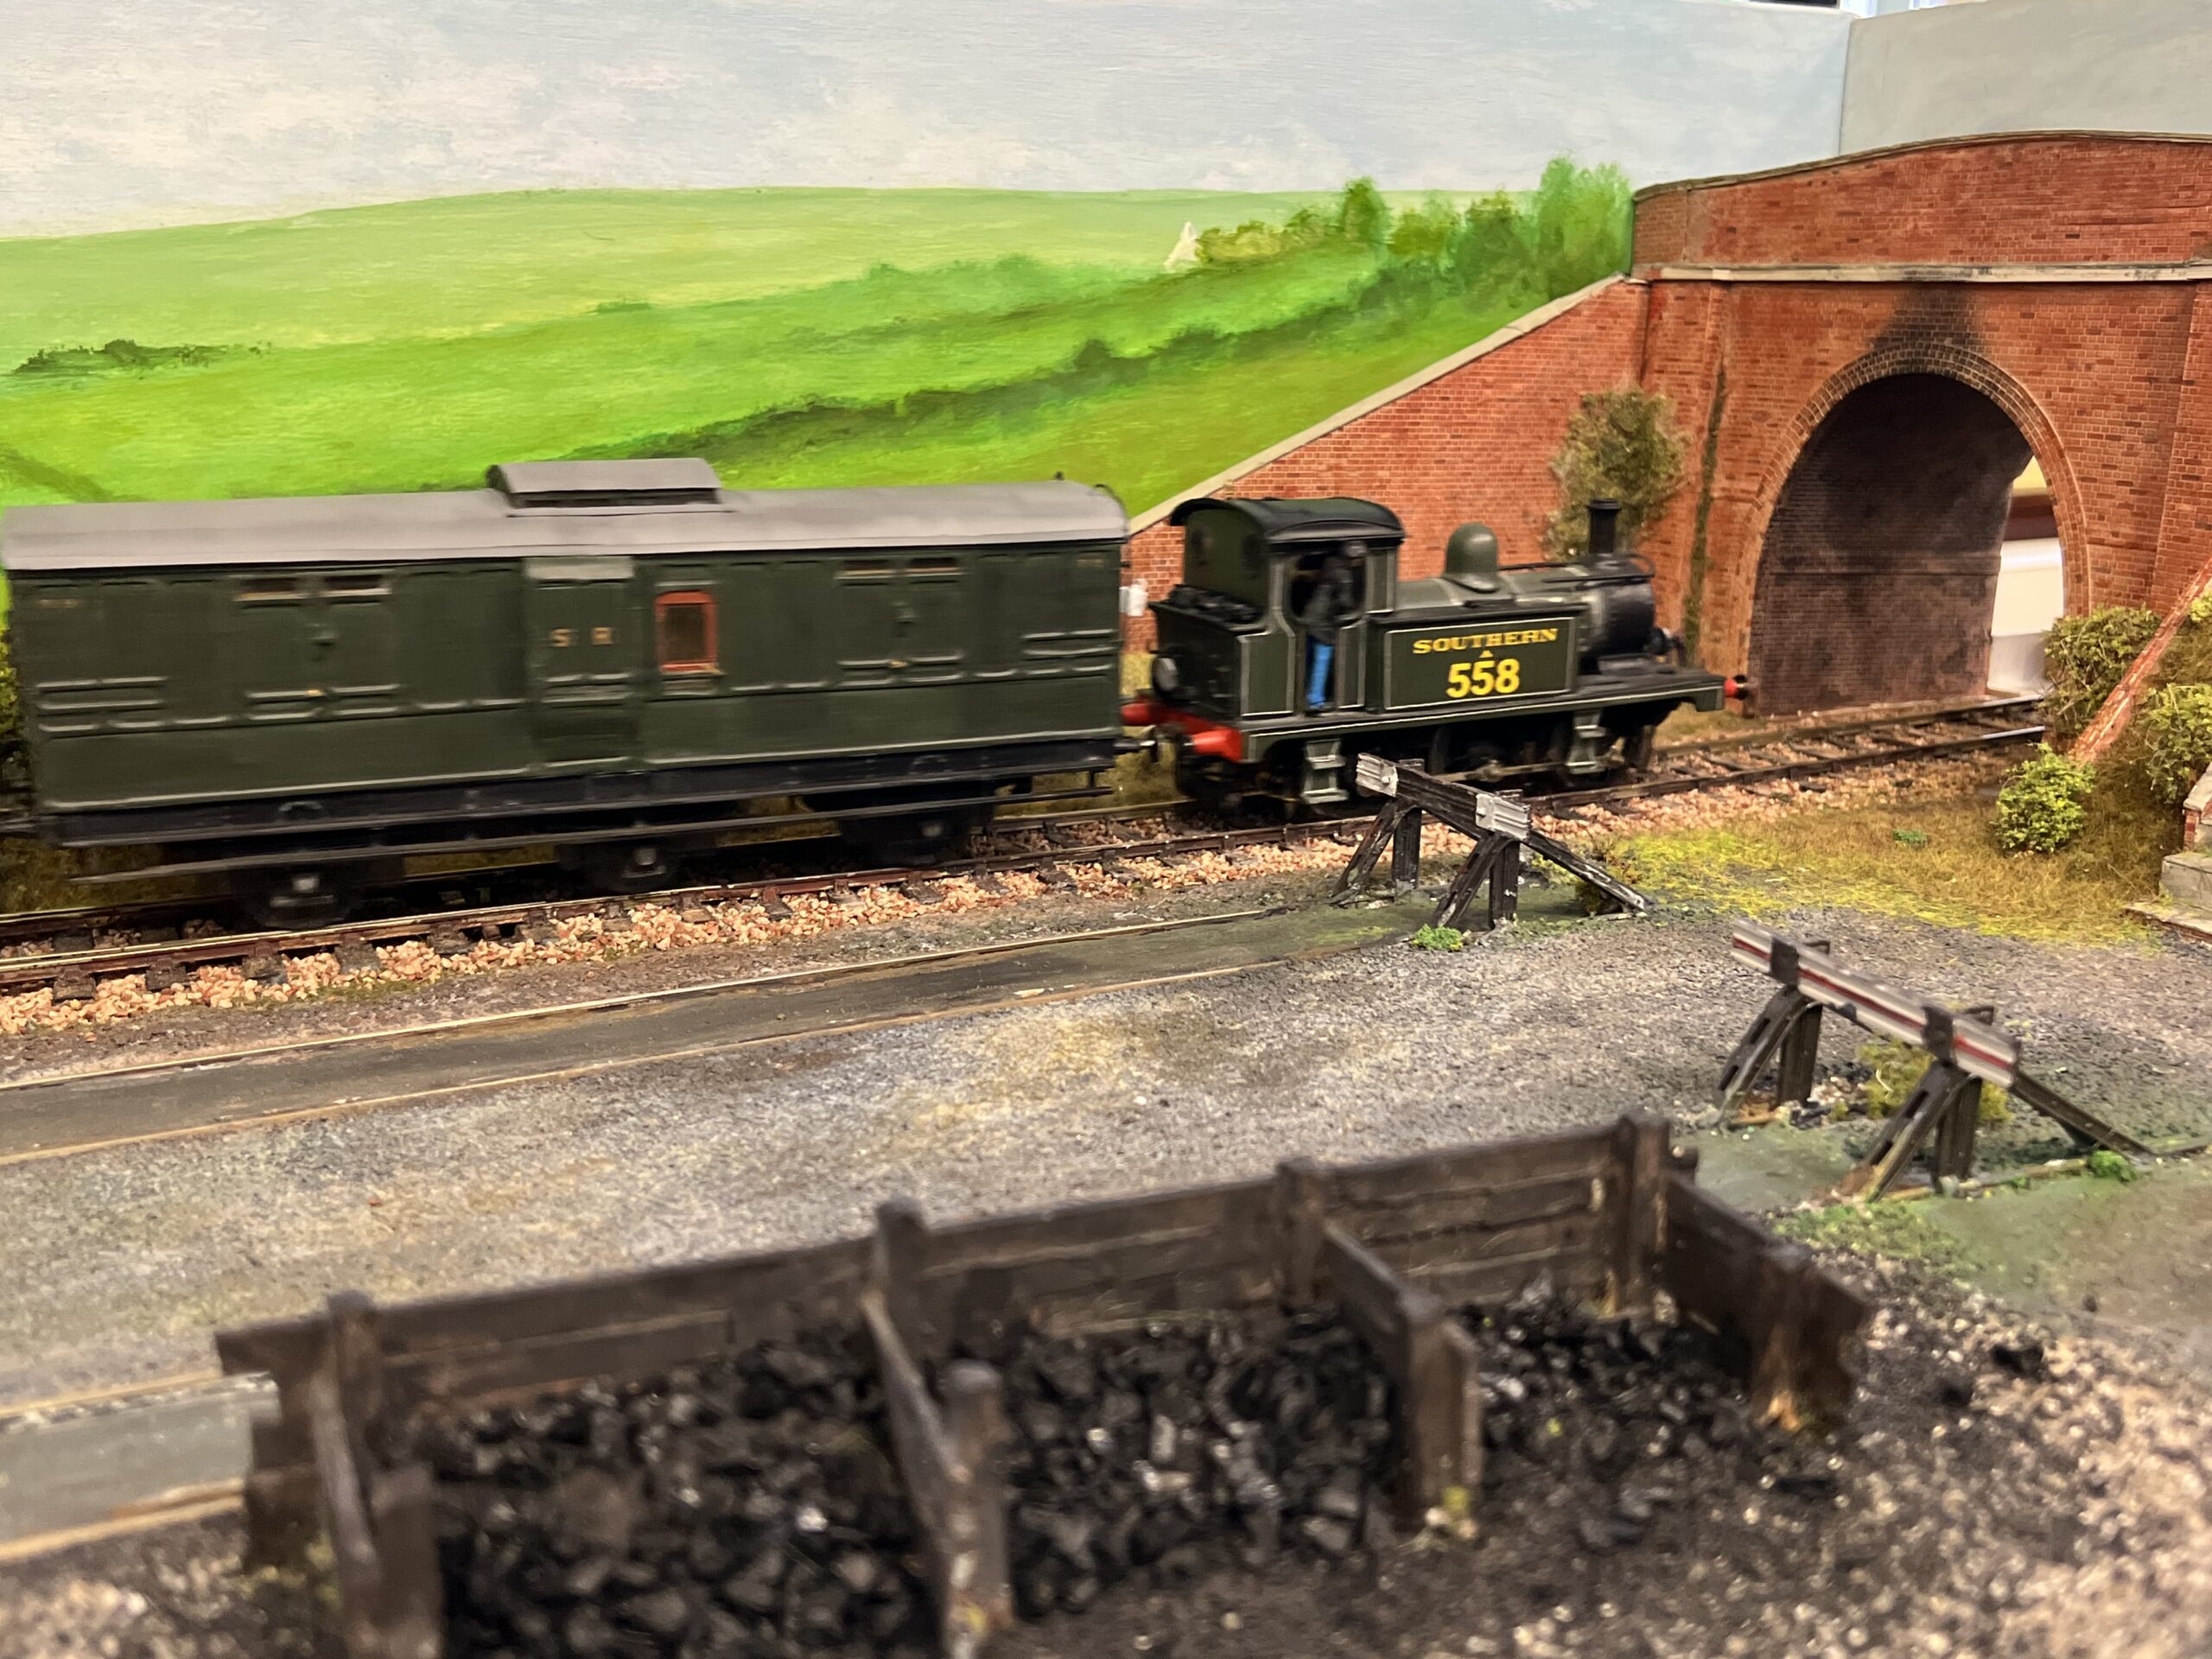 Creating Scenery on Model Railways.